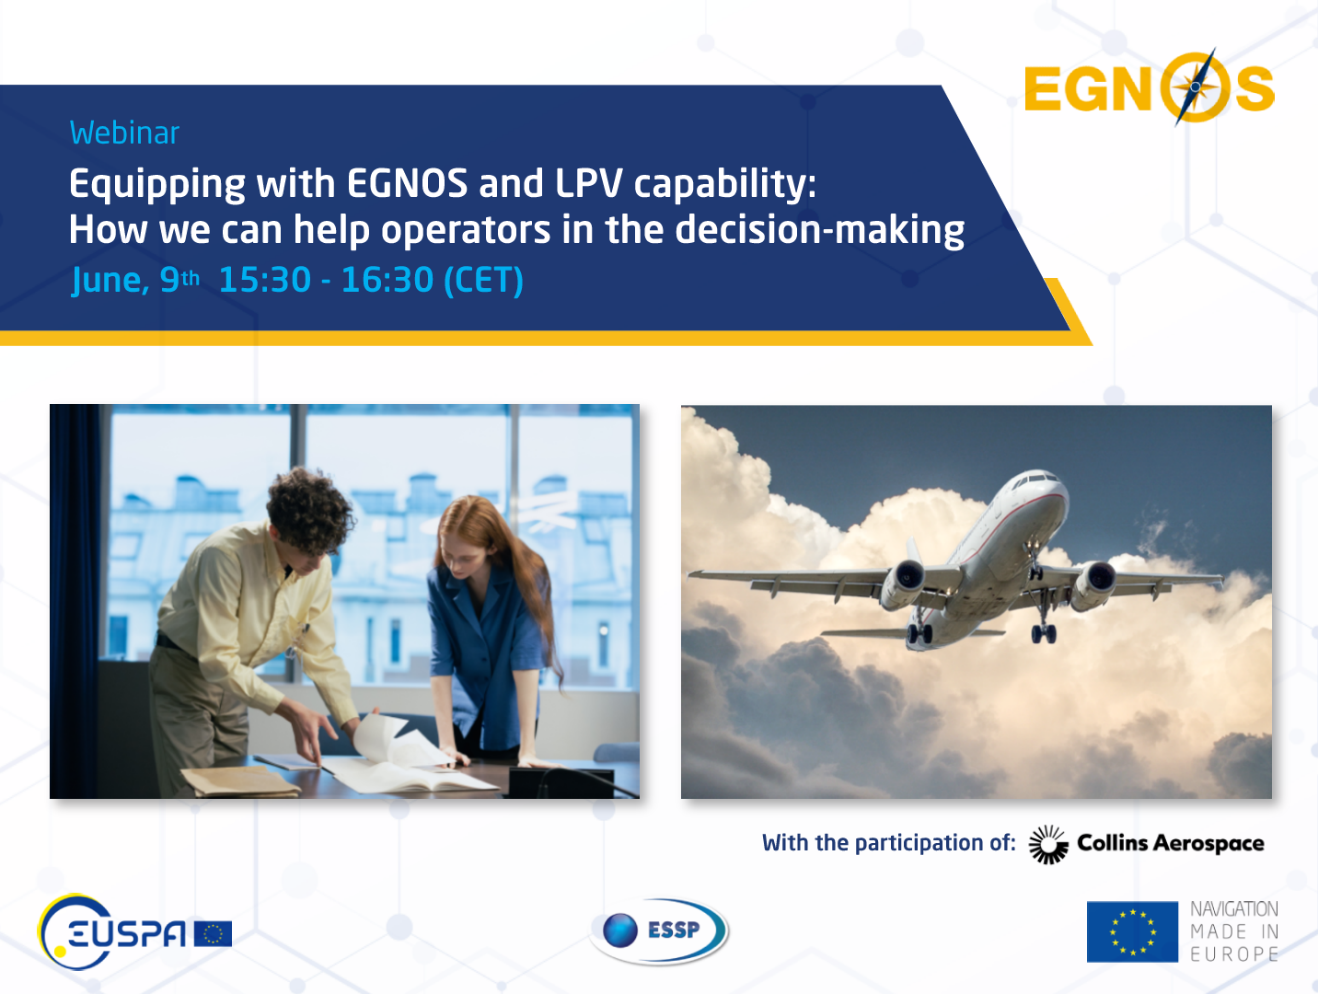 EGNOS webinar logo - Equipping with EGNOS and LPV